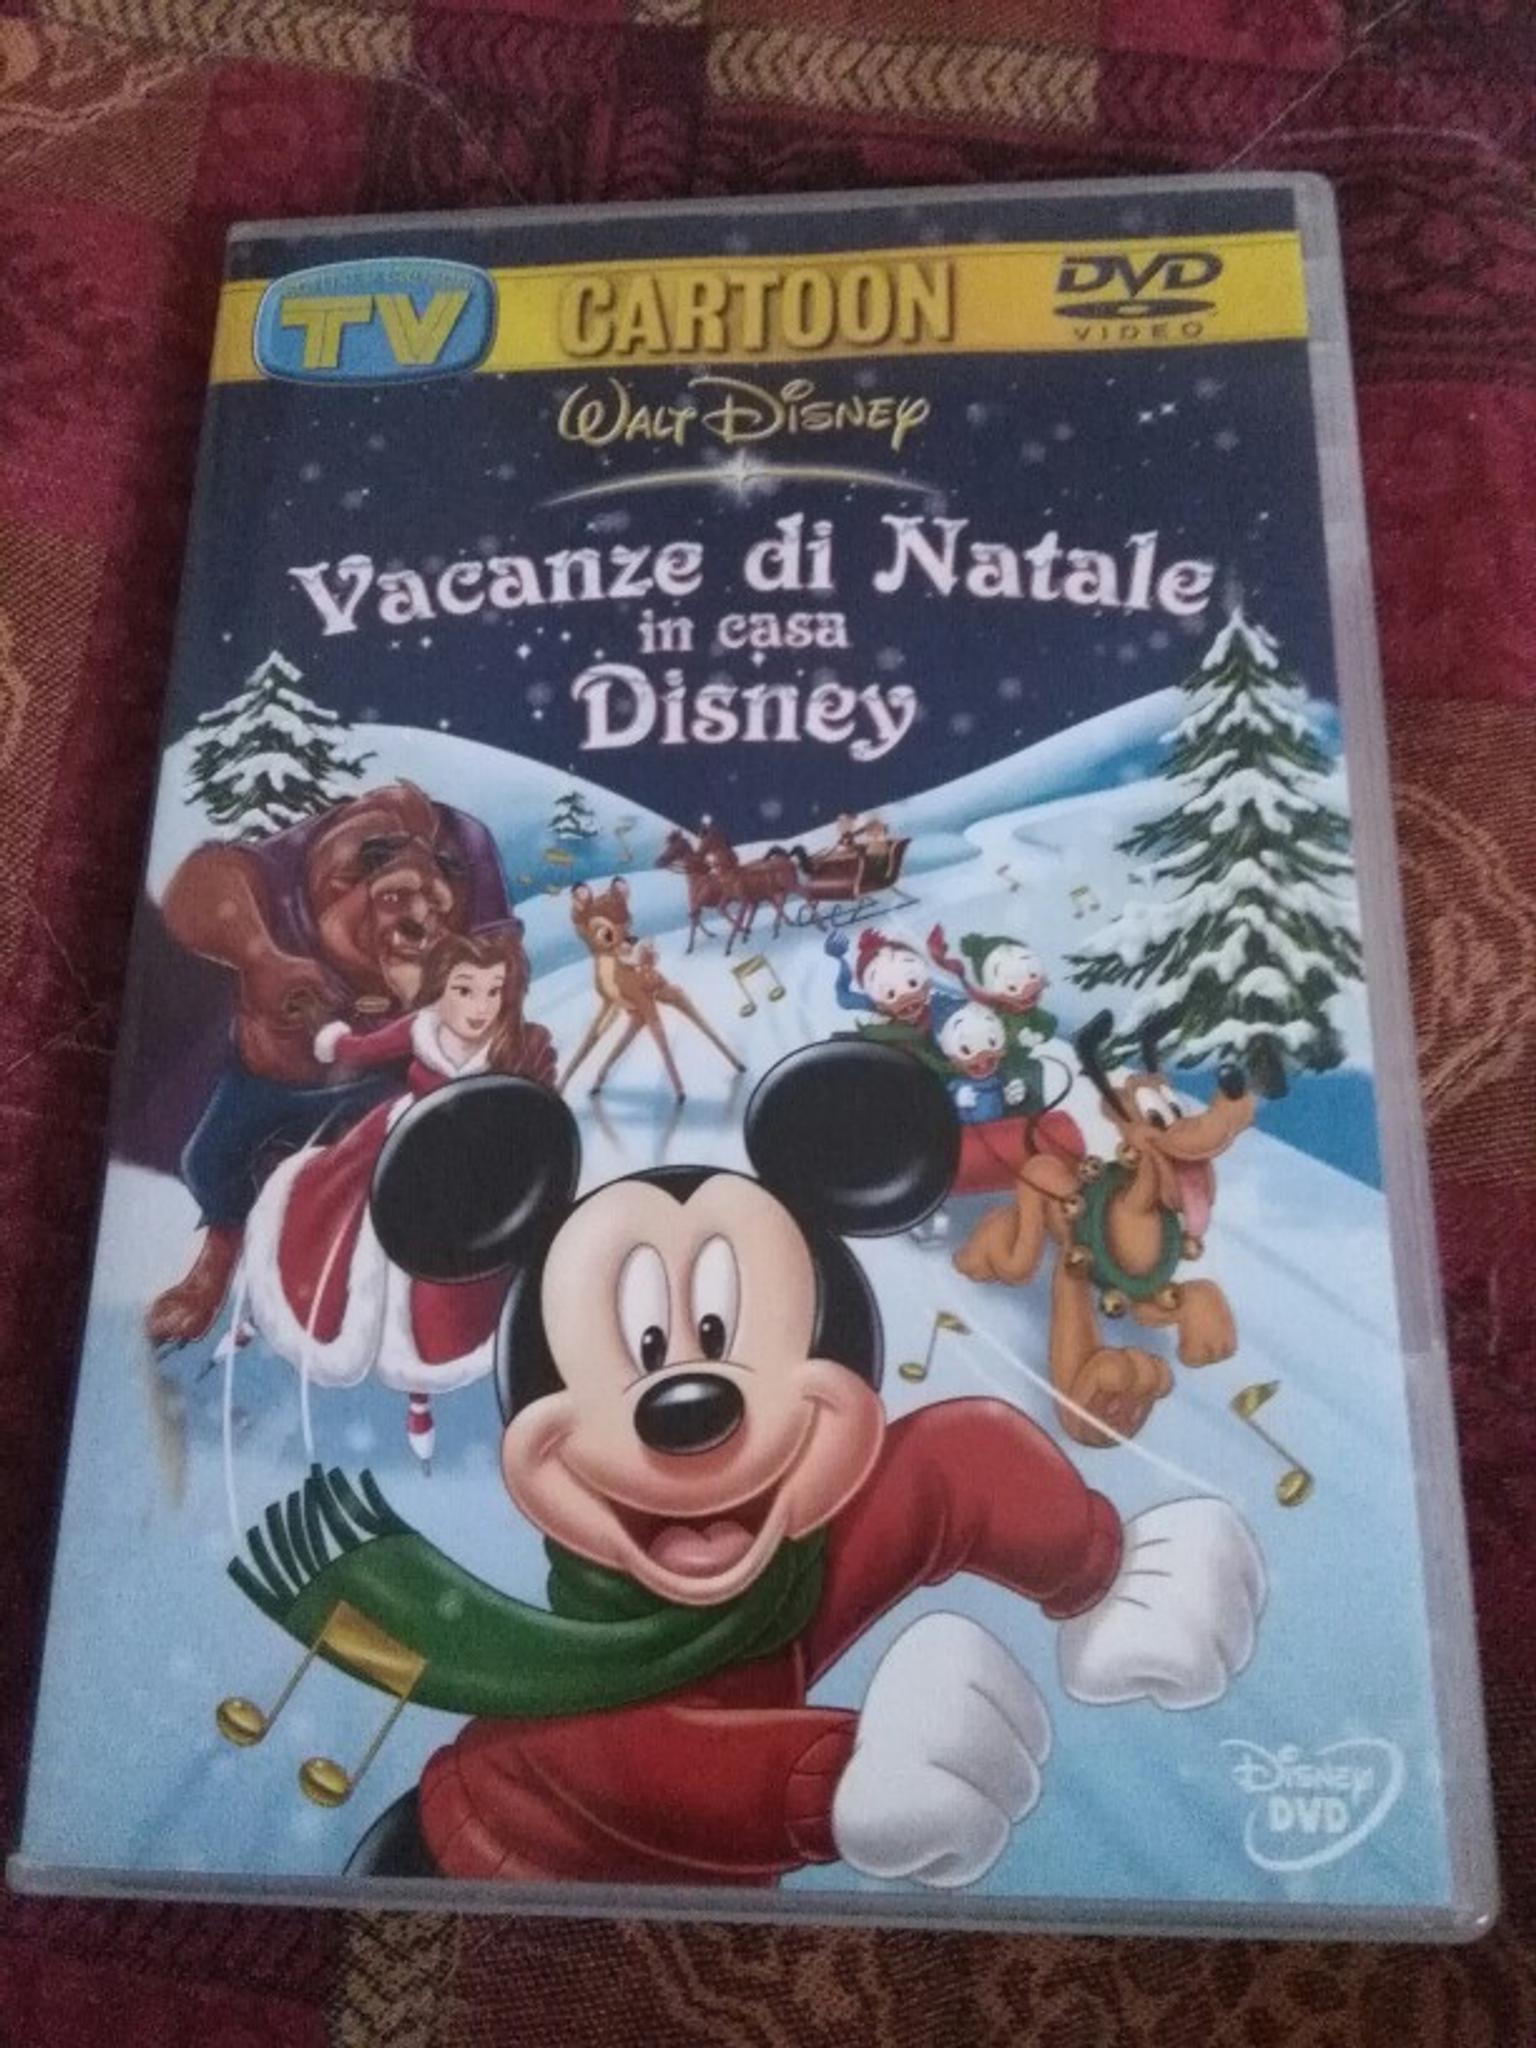 Babbo Natale Walt Disney.Vacanze Di Natale In Casa Disney In 20137 Milano For 7 50 For Sale Shpock